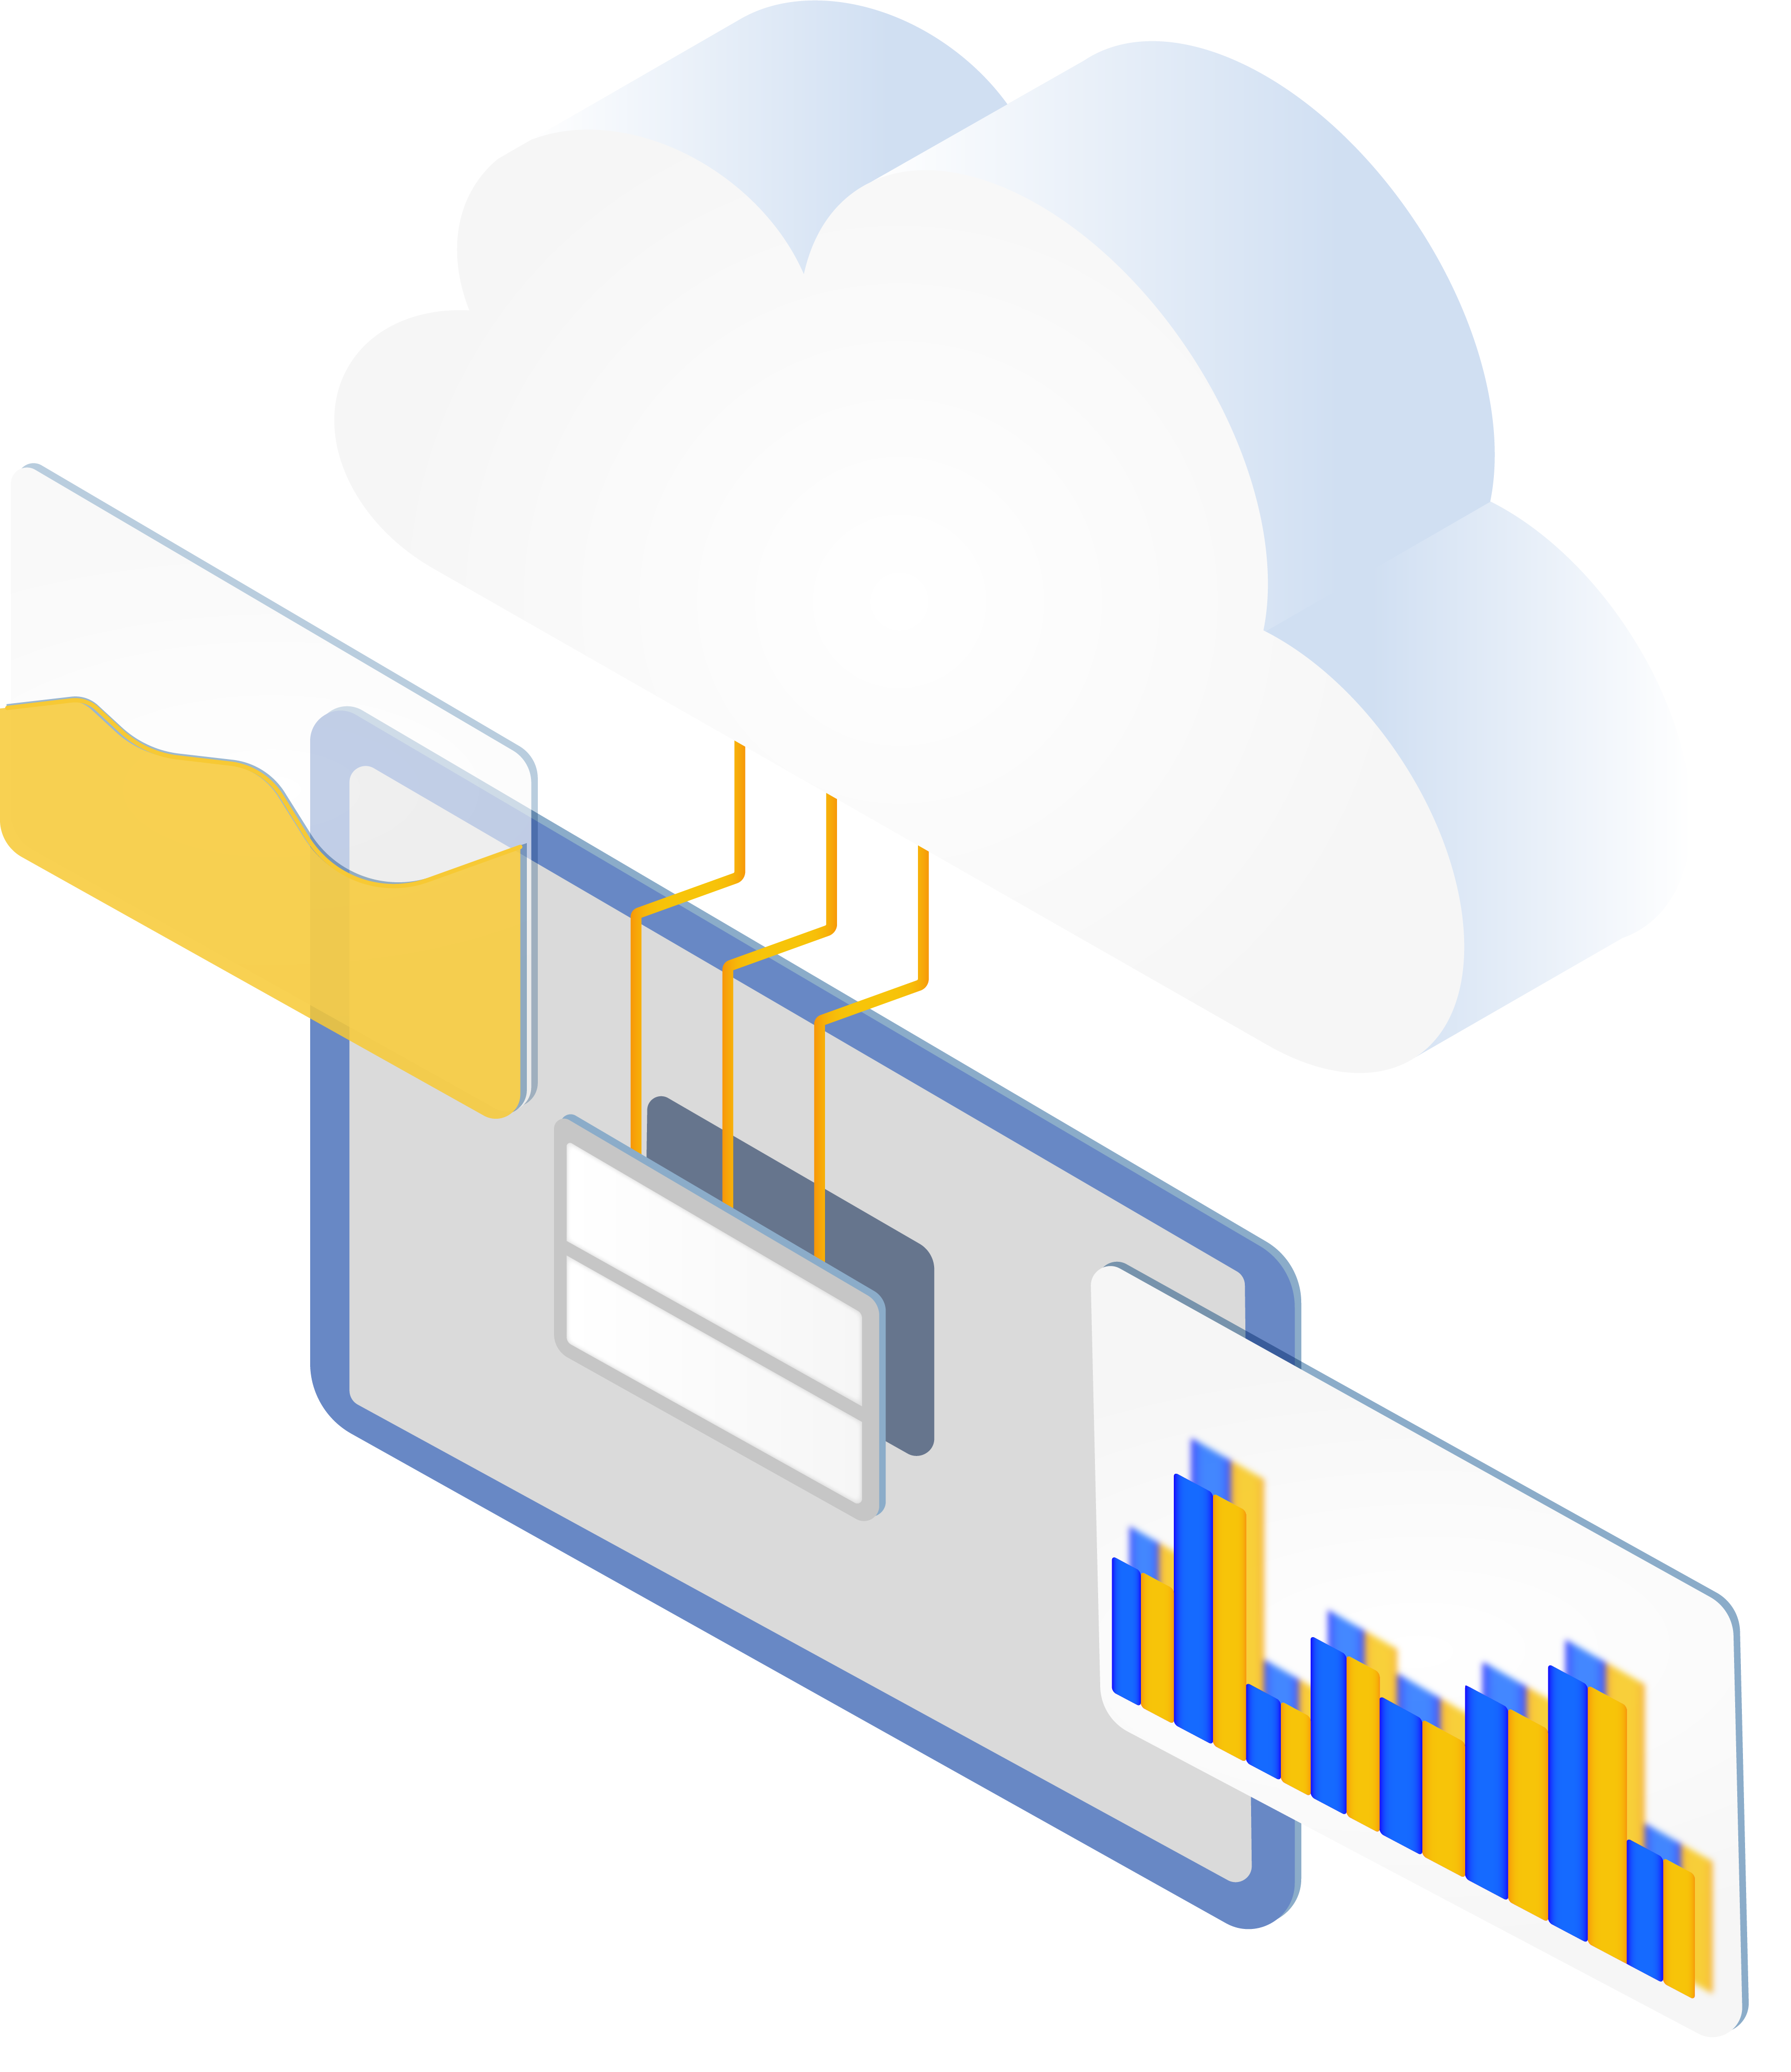 cloud platform